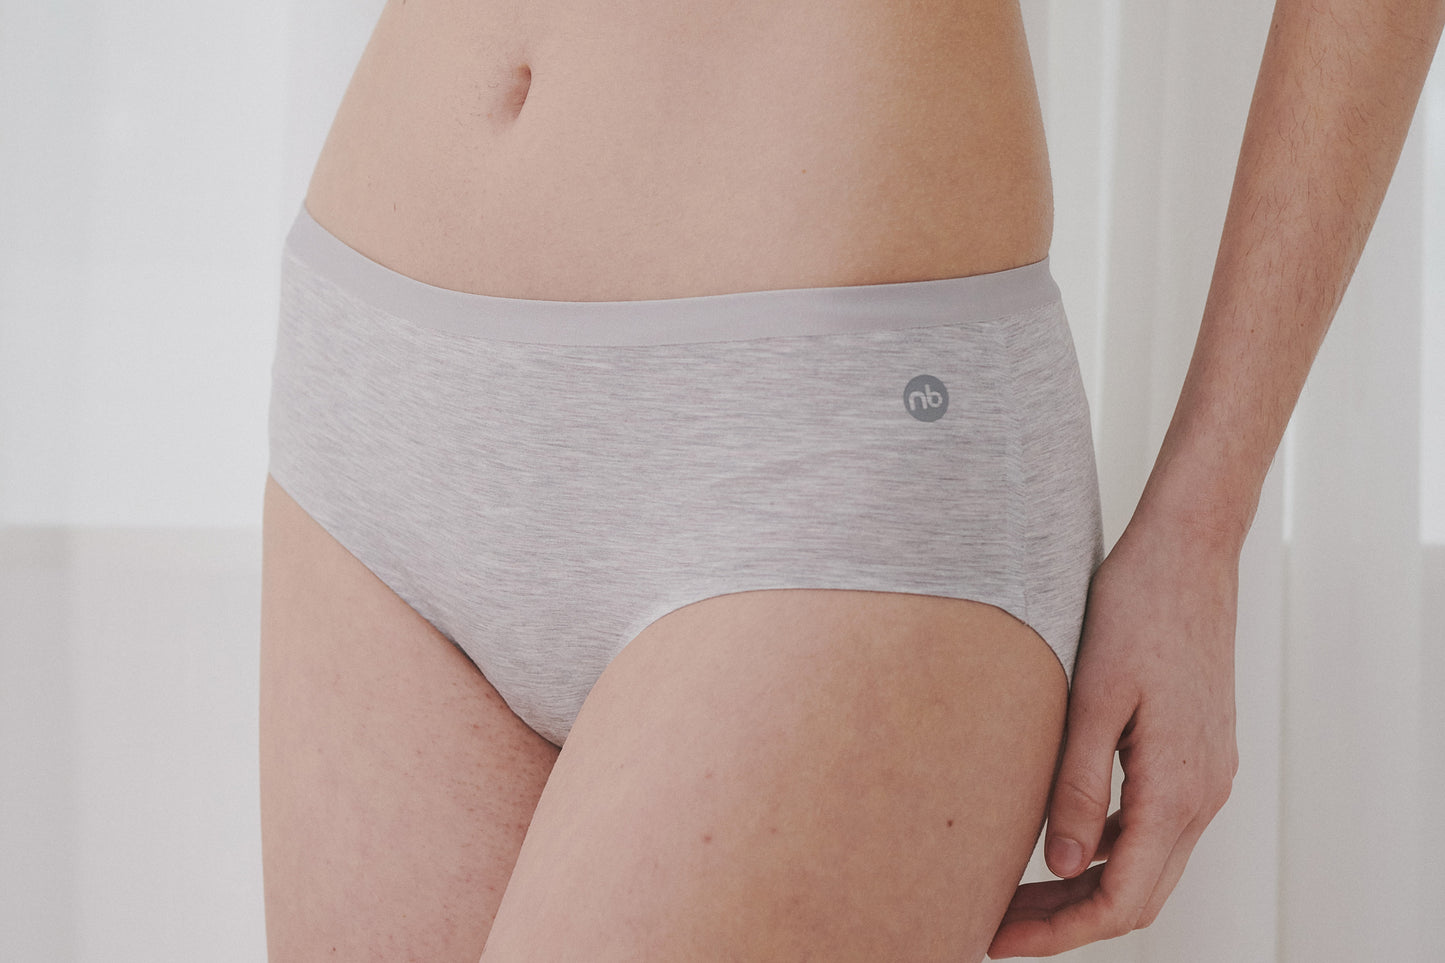 Women's Basics Bikini Underwear (Bamboo Spandex, 2 Pack) - Charcoal an –  Nest Designs